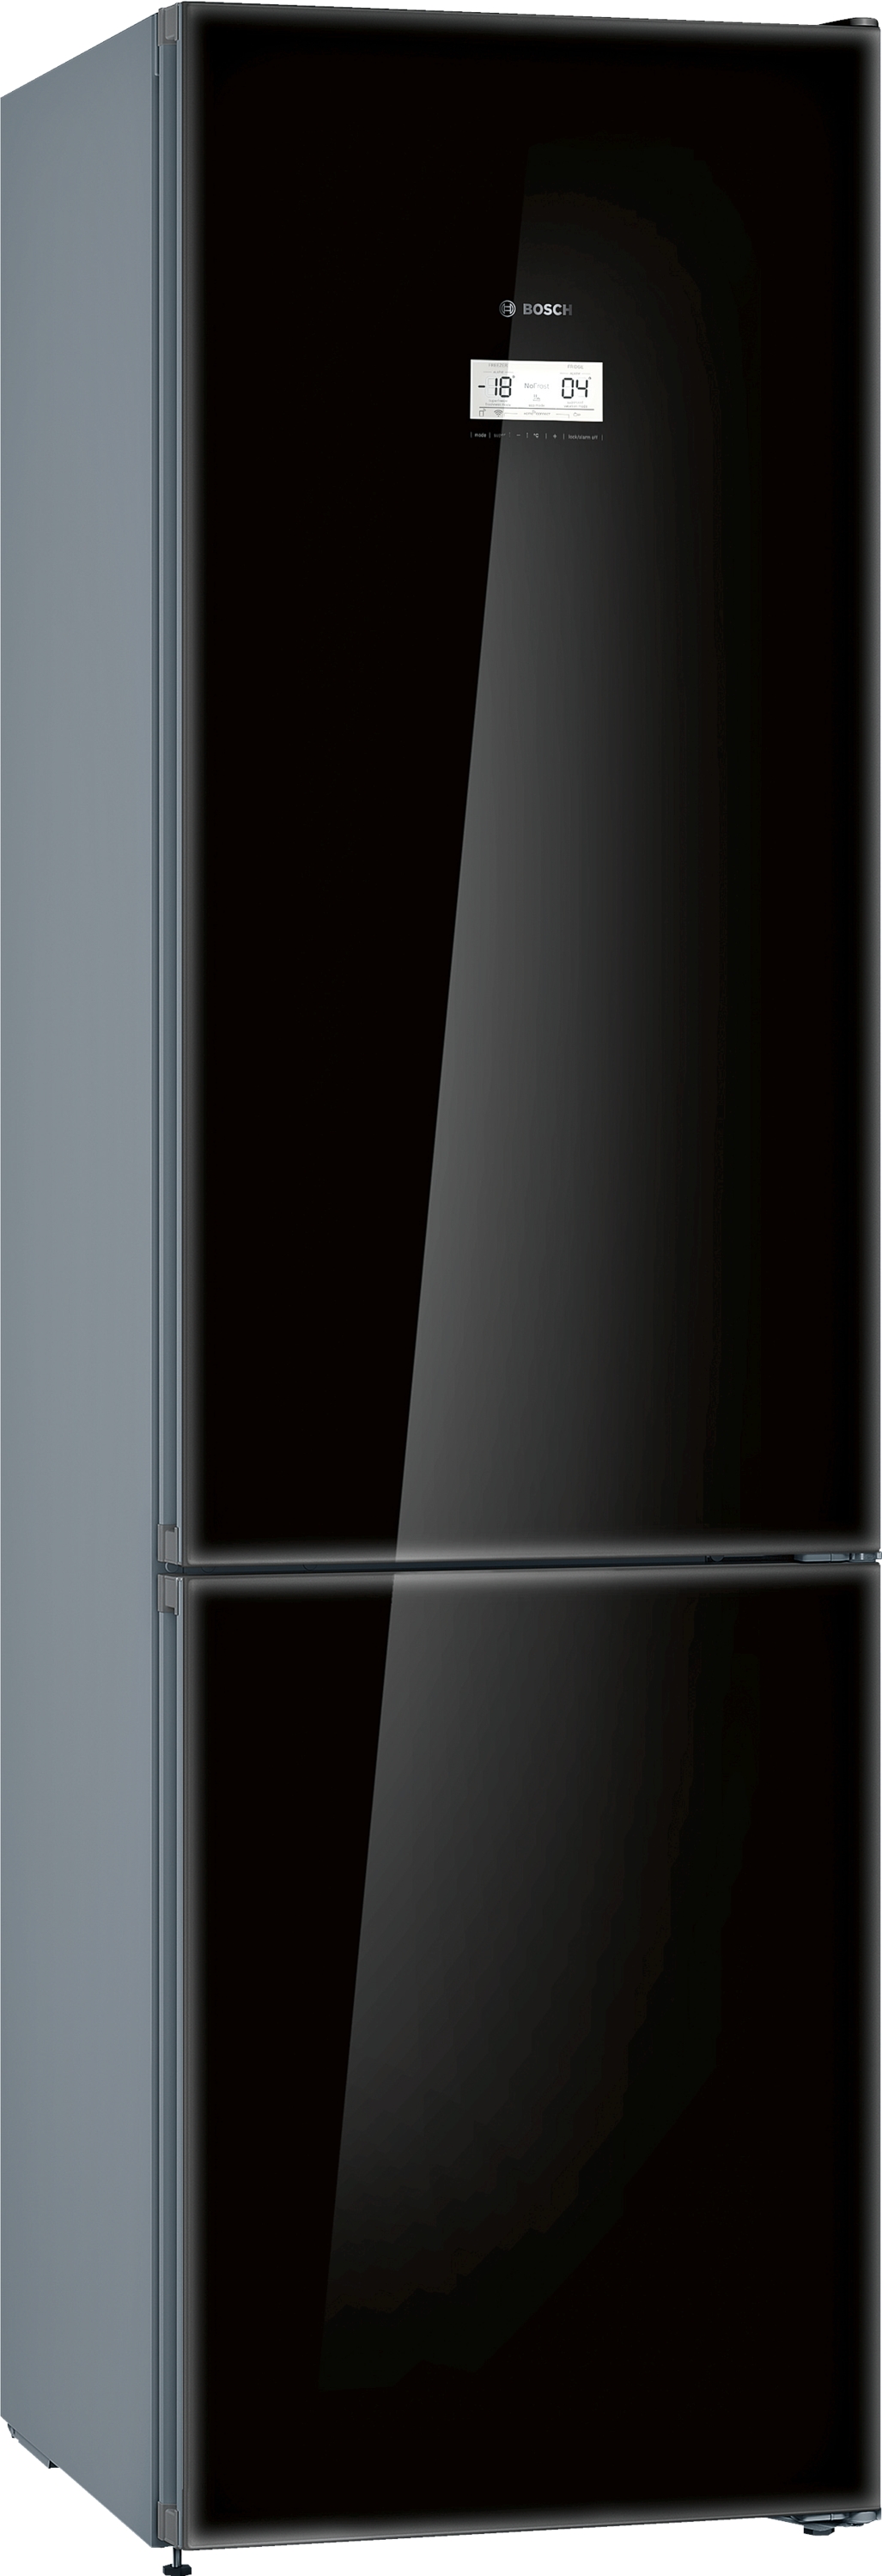 KGN39LBE5, Samostojeći frižider sa zamrzivačem dole, staklena vrata